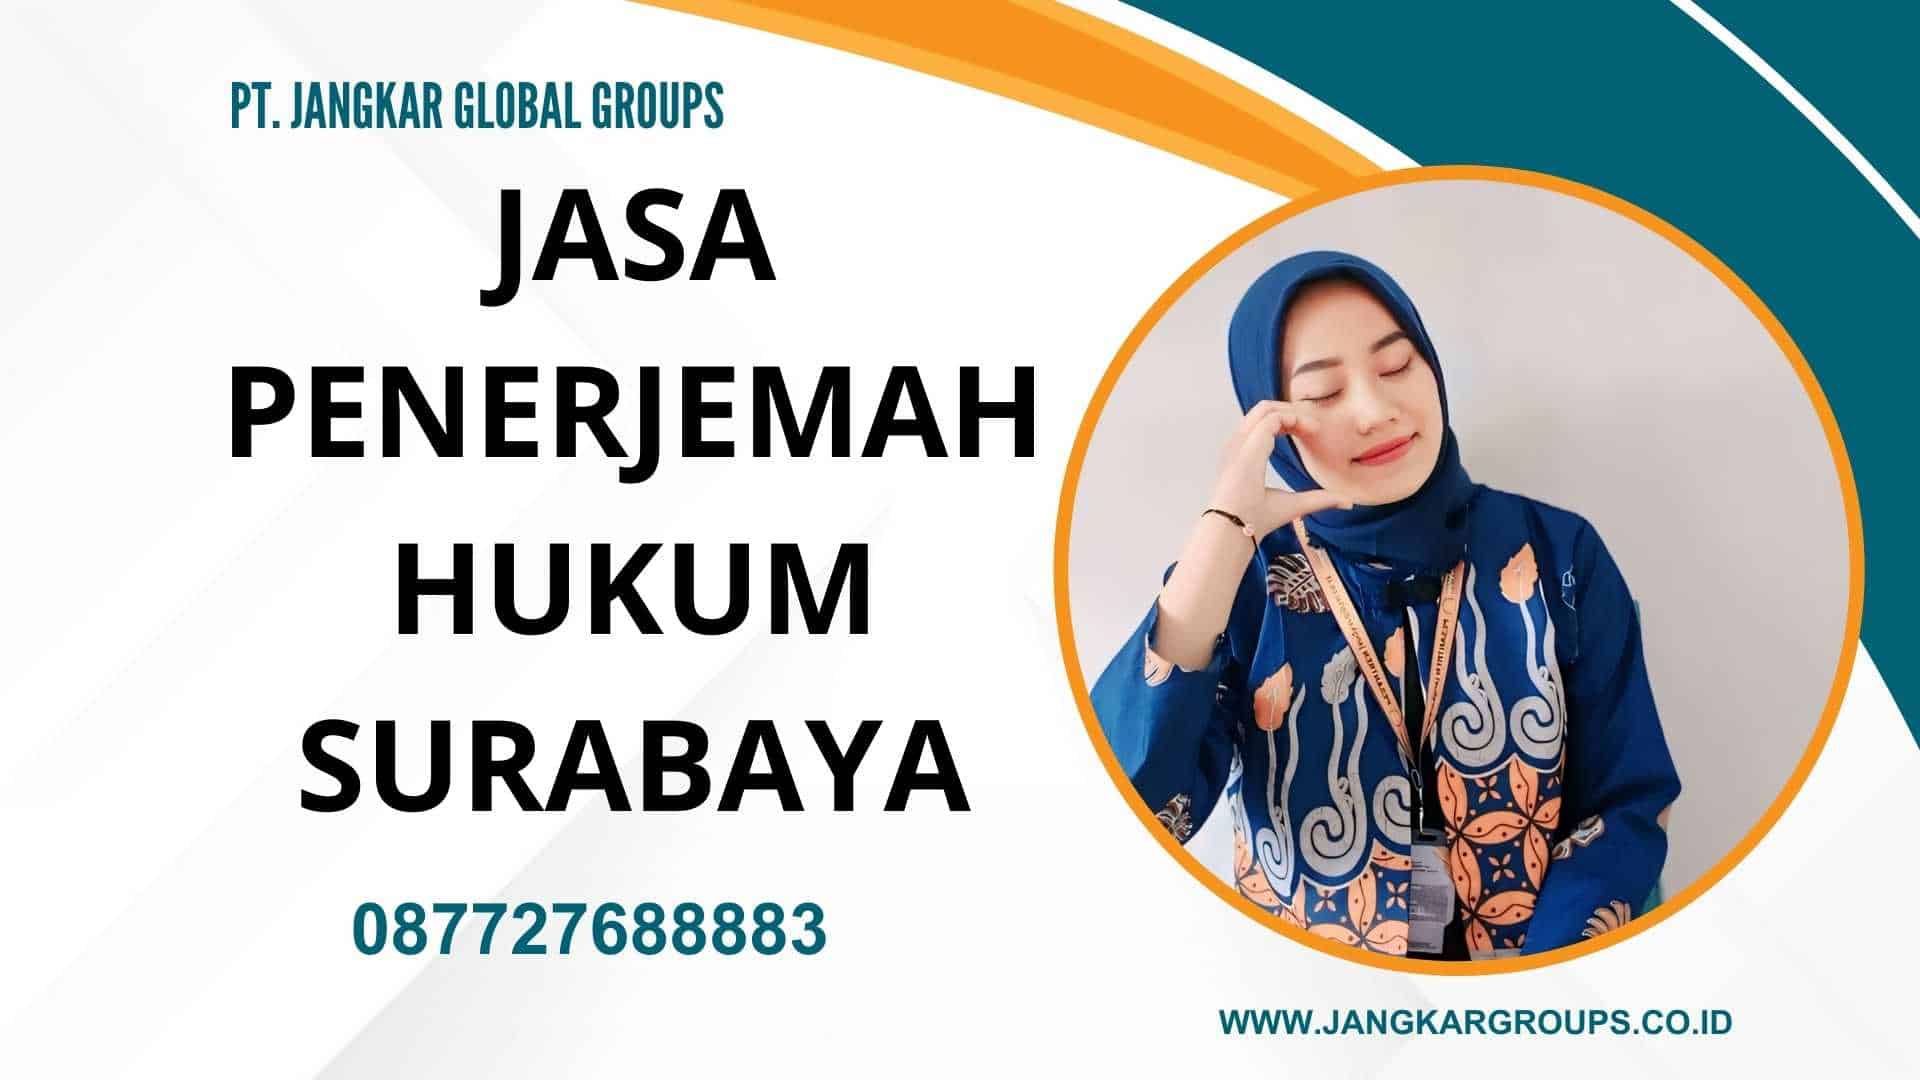 Jasa Penerjemah Hukum Surabaya